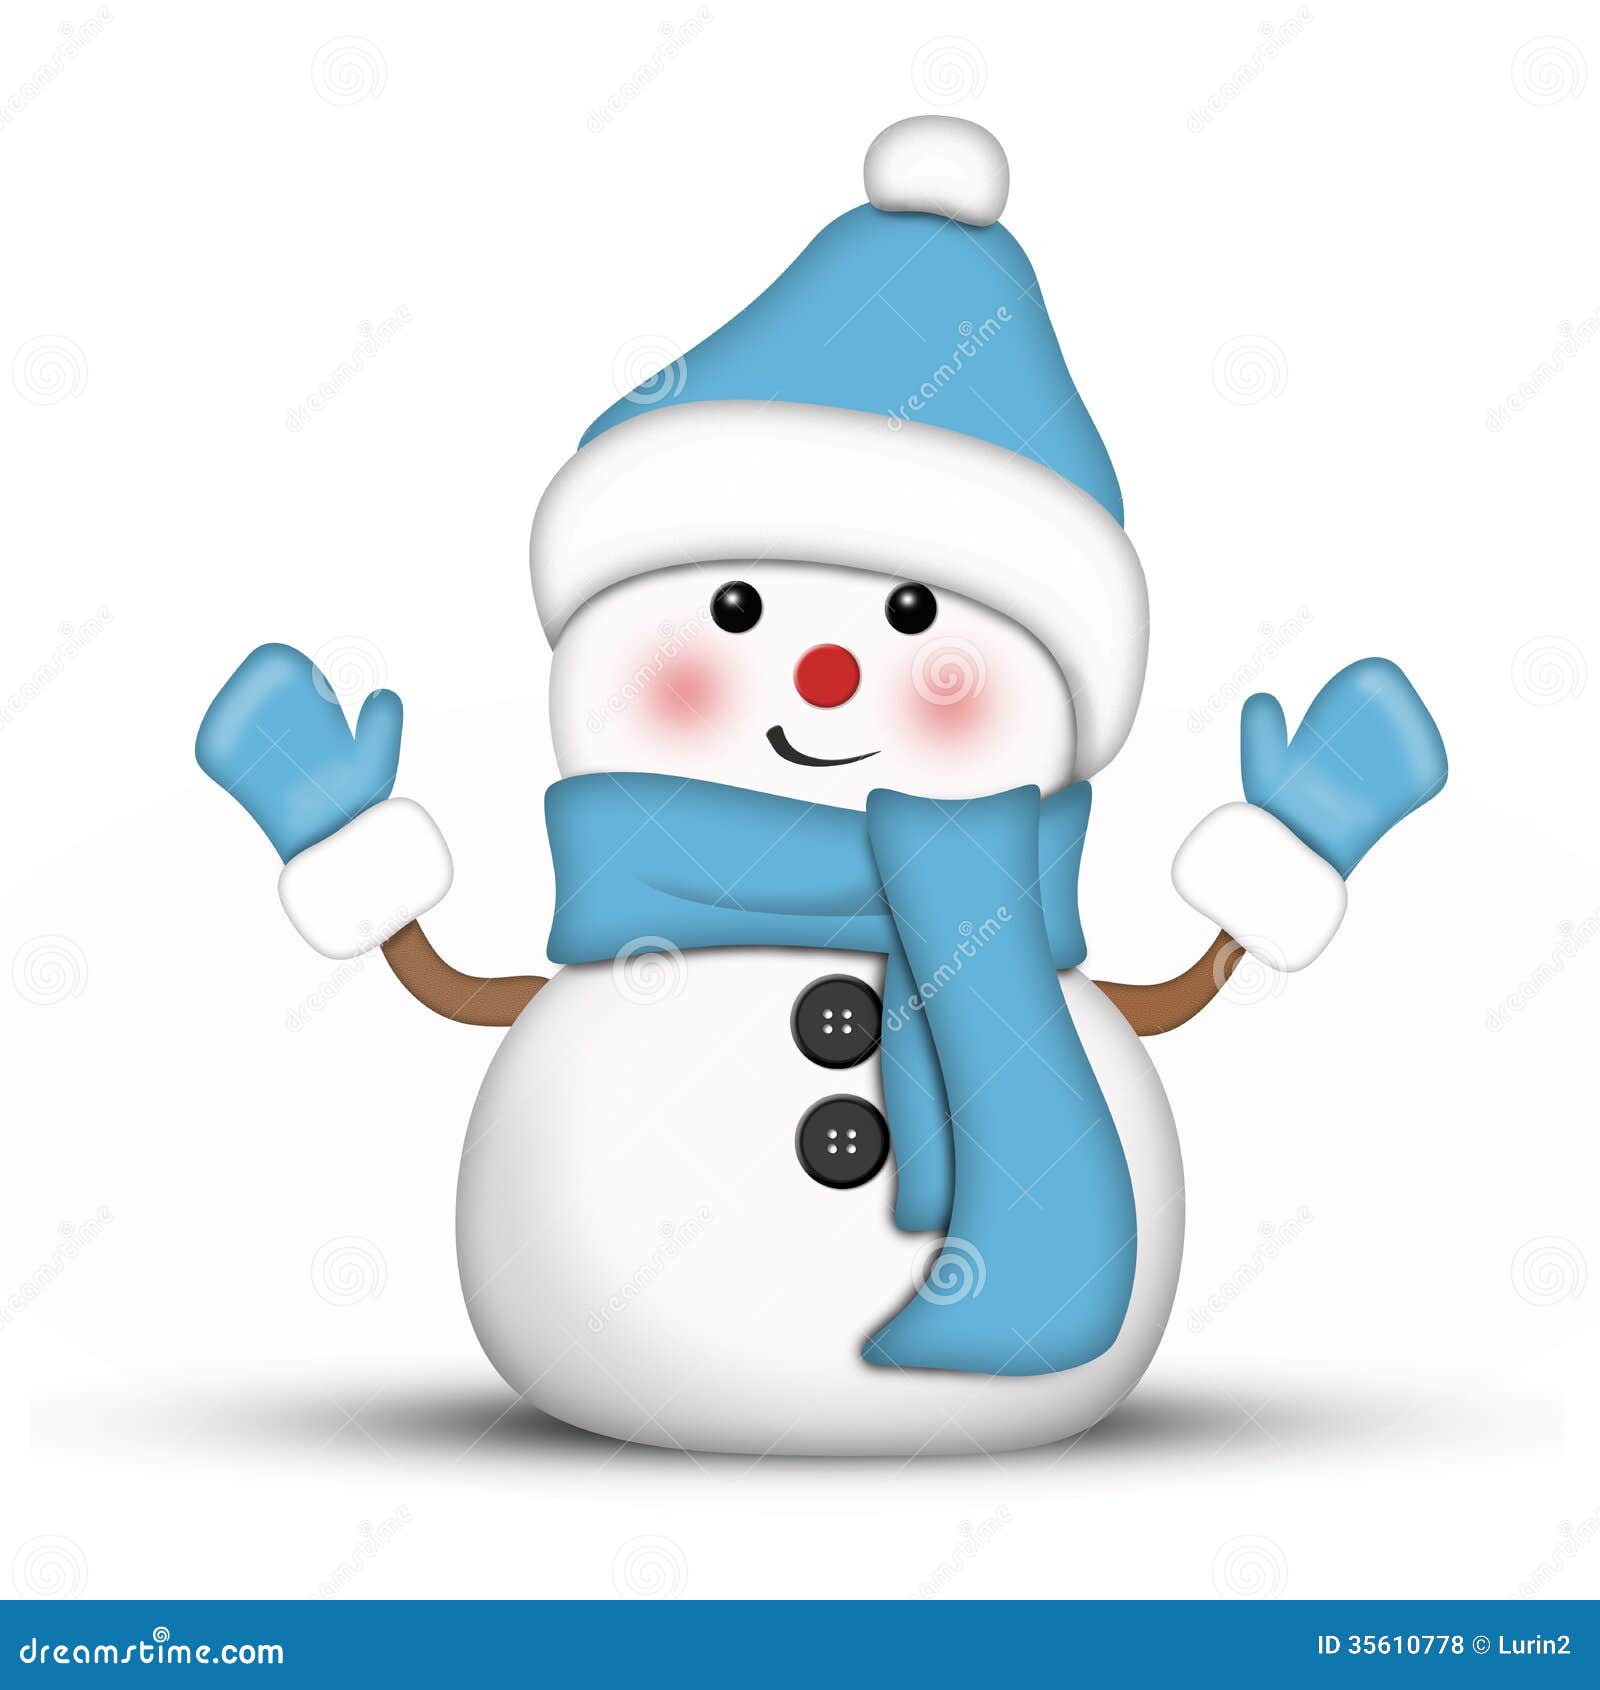 https://thumbs.dreamstime.com/z/amusing-snowman-dressed-blue-against-white-background-35610778.jpg